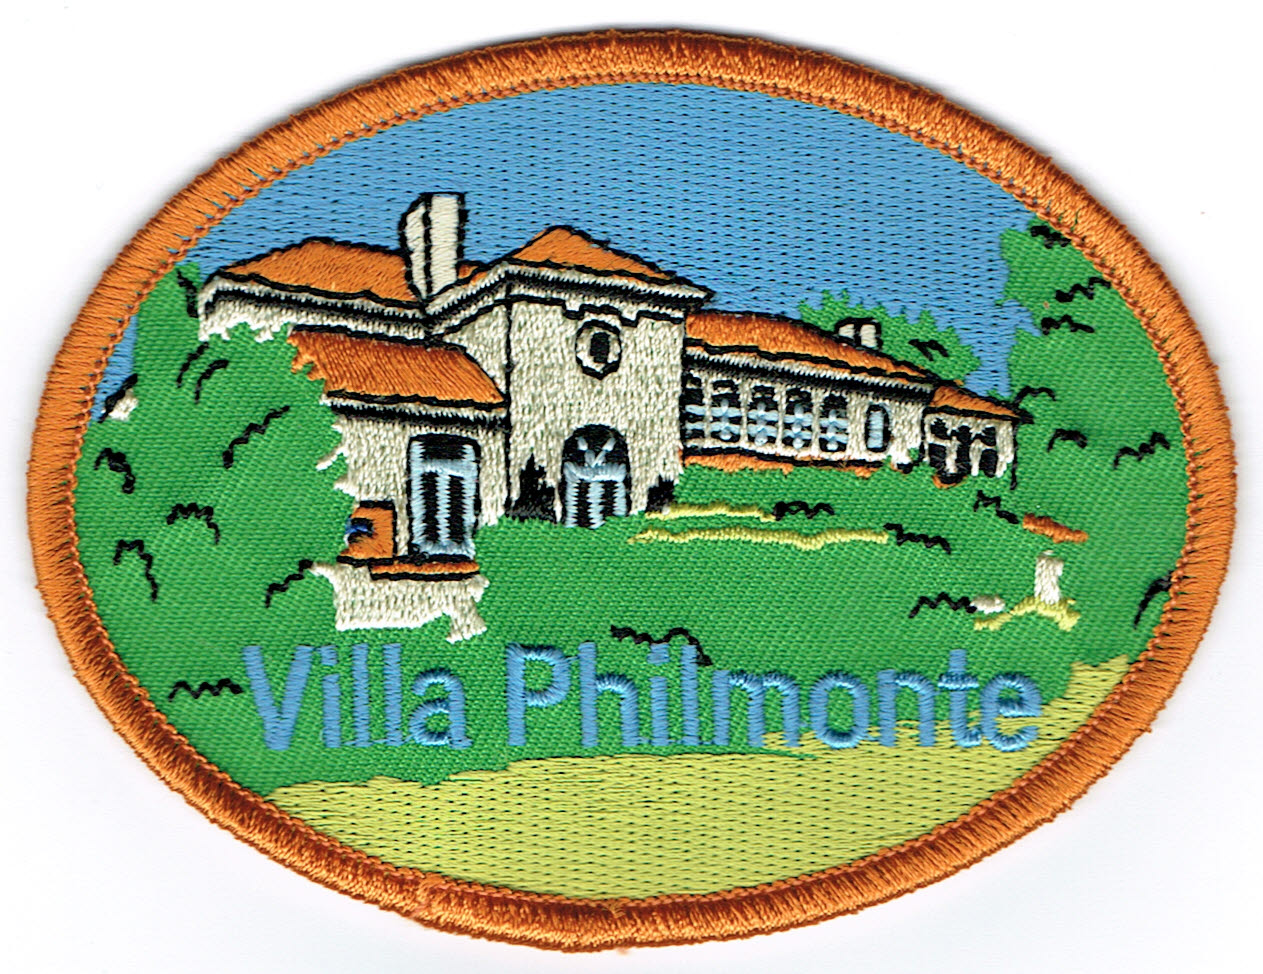 Villa Philmonte patch image